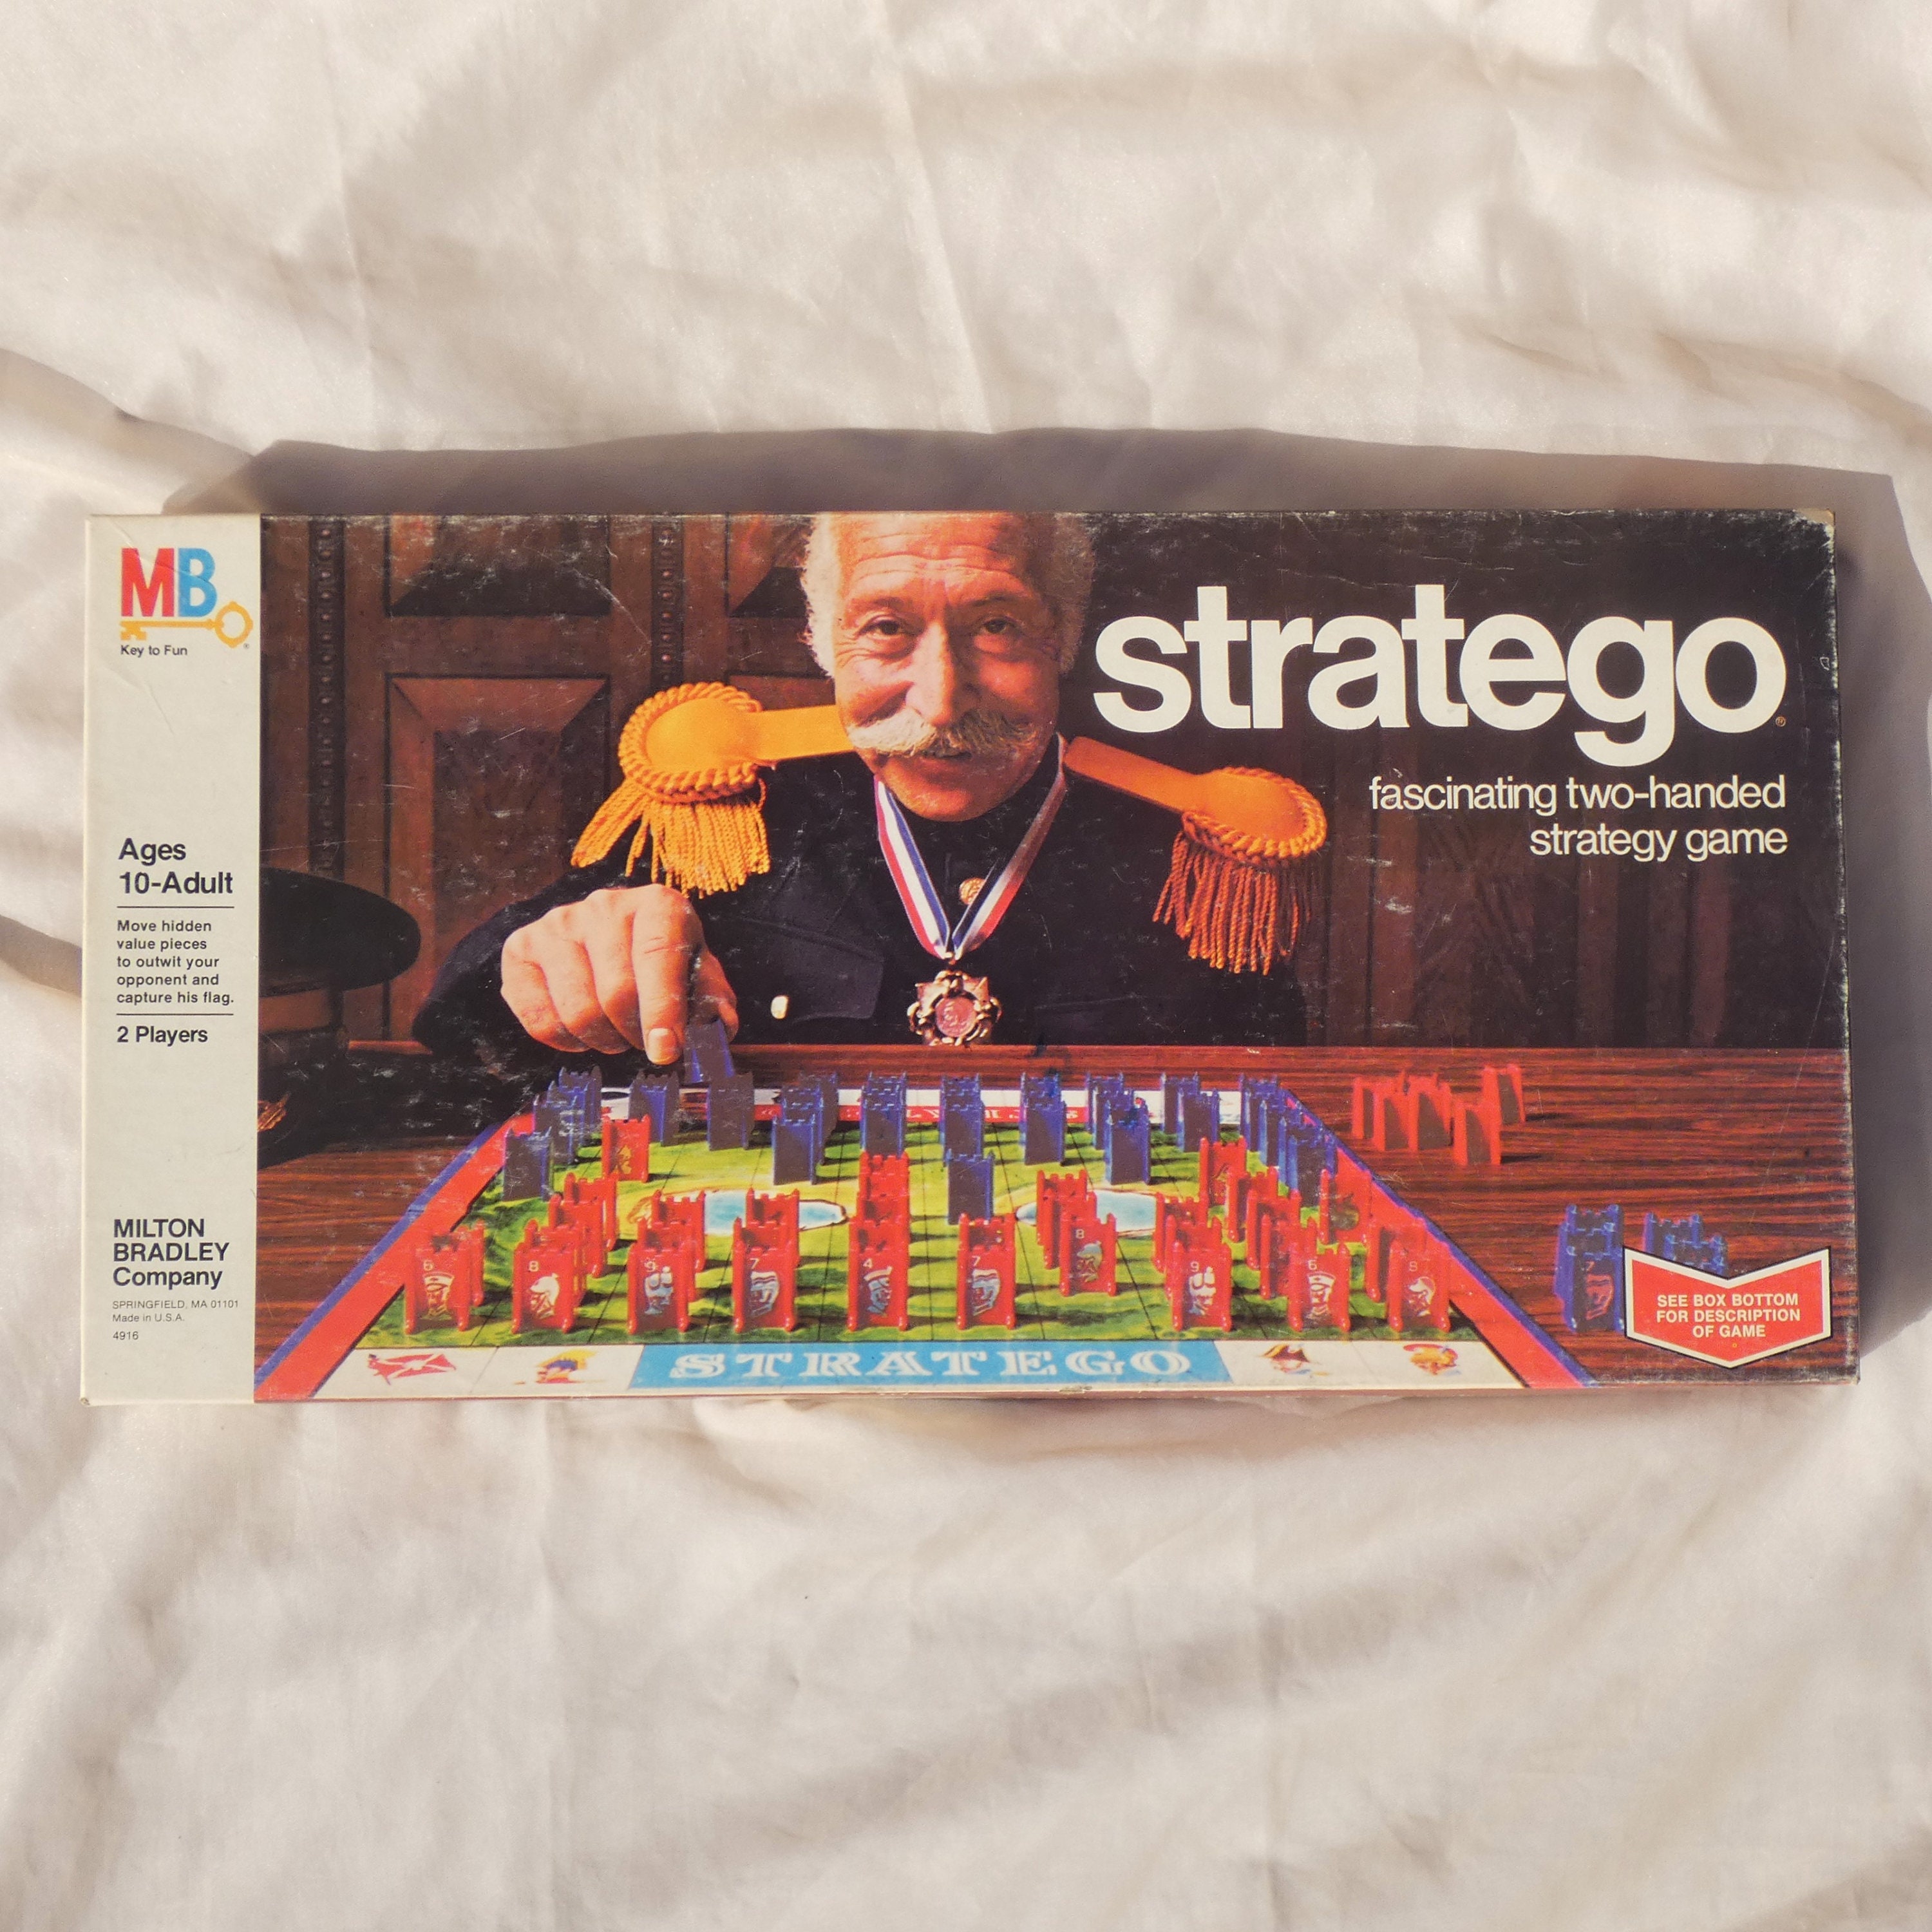 Vtg Stratego , Board Game 1986 , Milton Bradley 4916 Xs Military